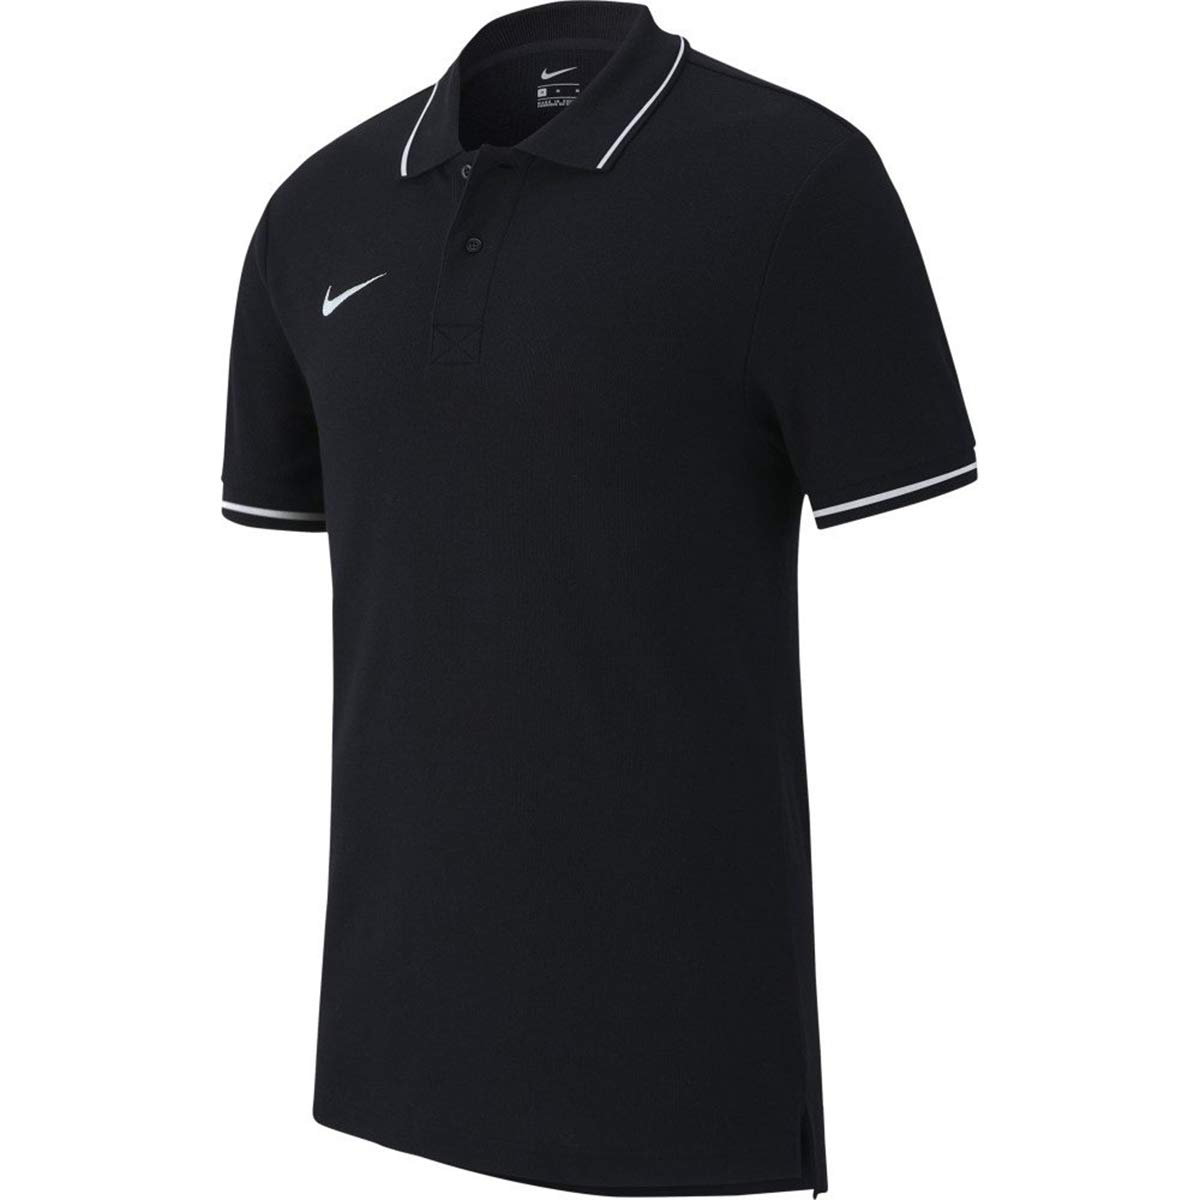 Nike Herren M TM CLUB19 SS Polo Shirt, Schwarz (Black/White/010), M